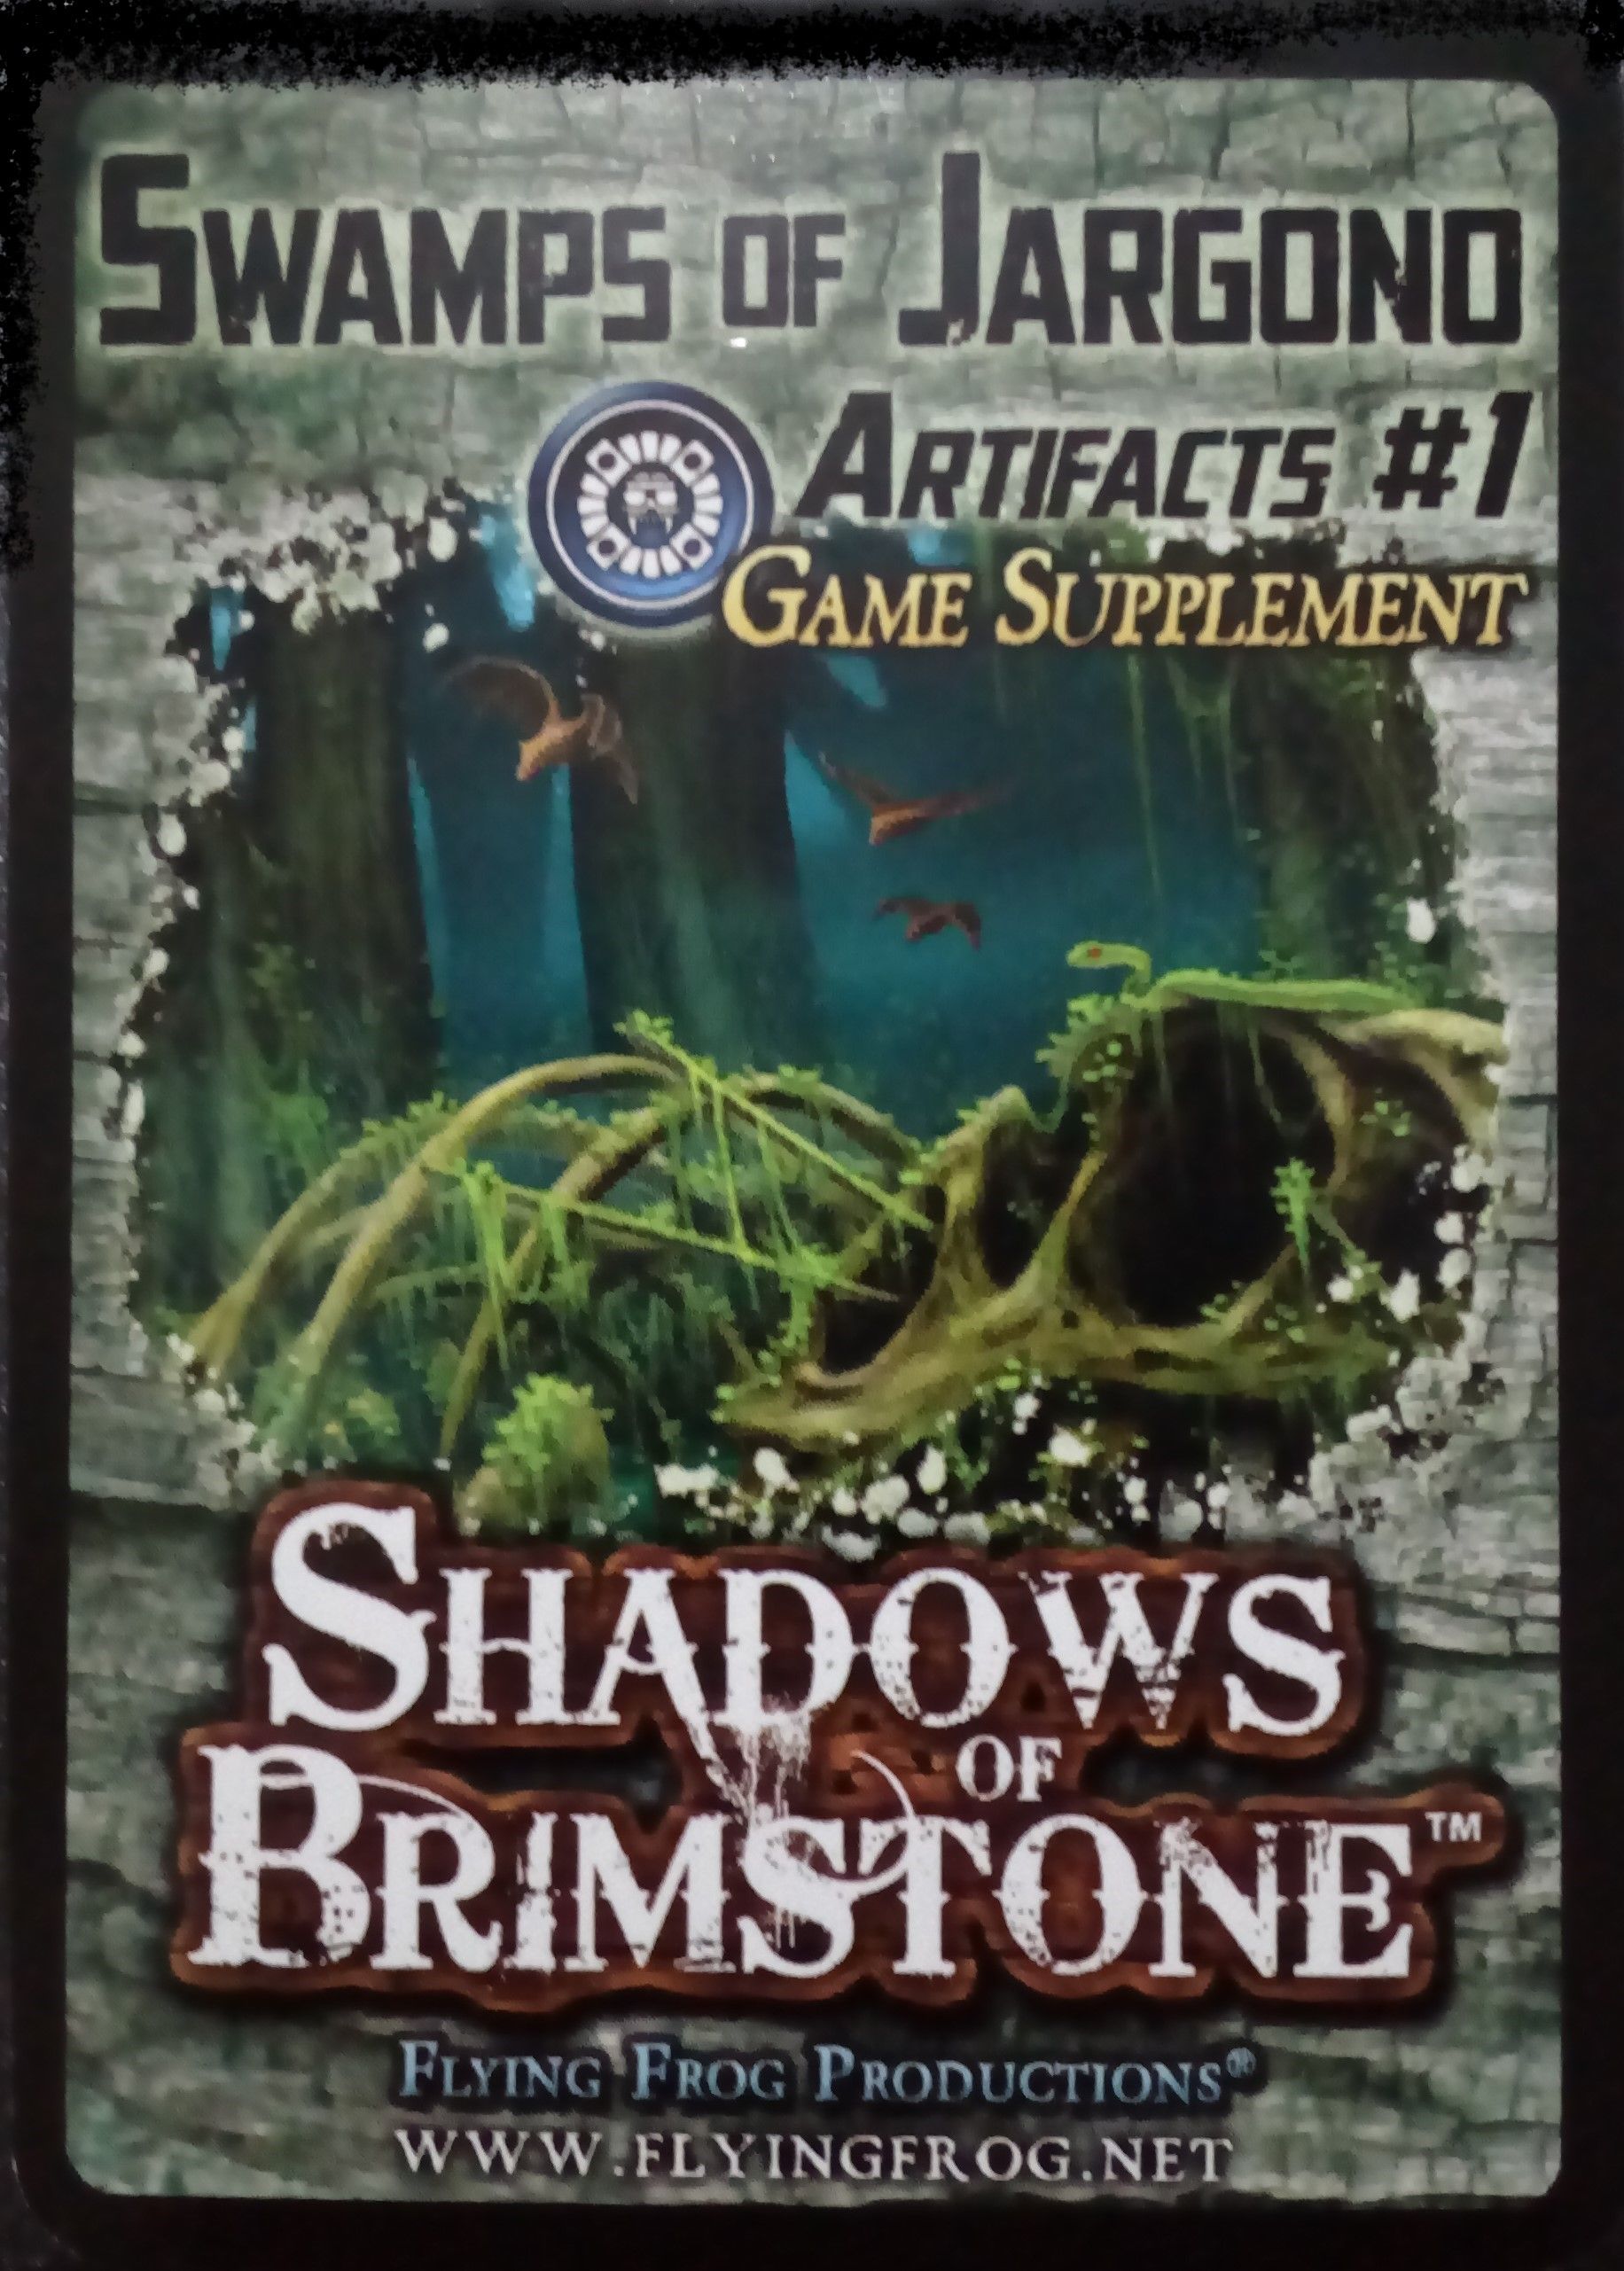 Shadows of Brimstone: Jargono Artifacts Supplement